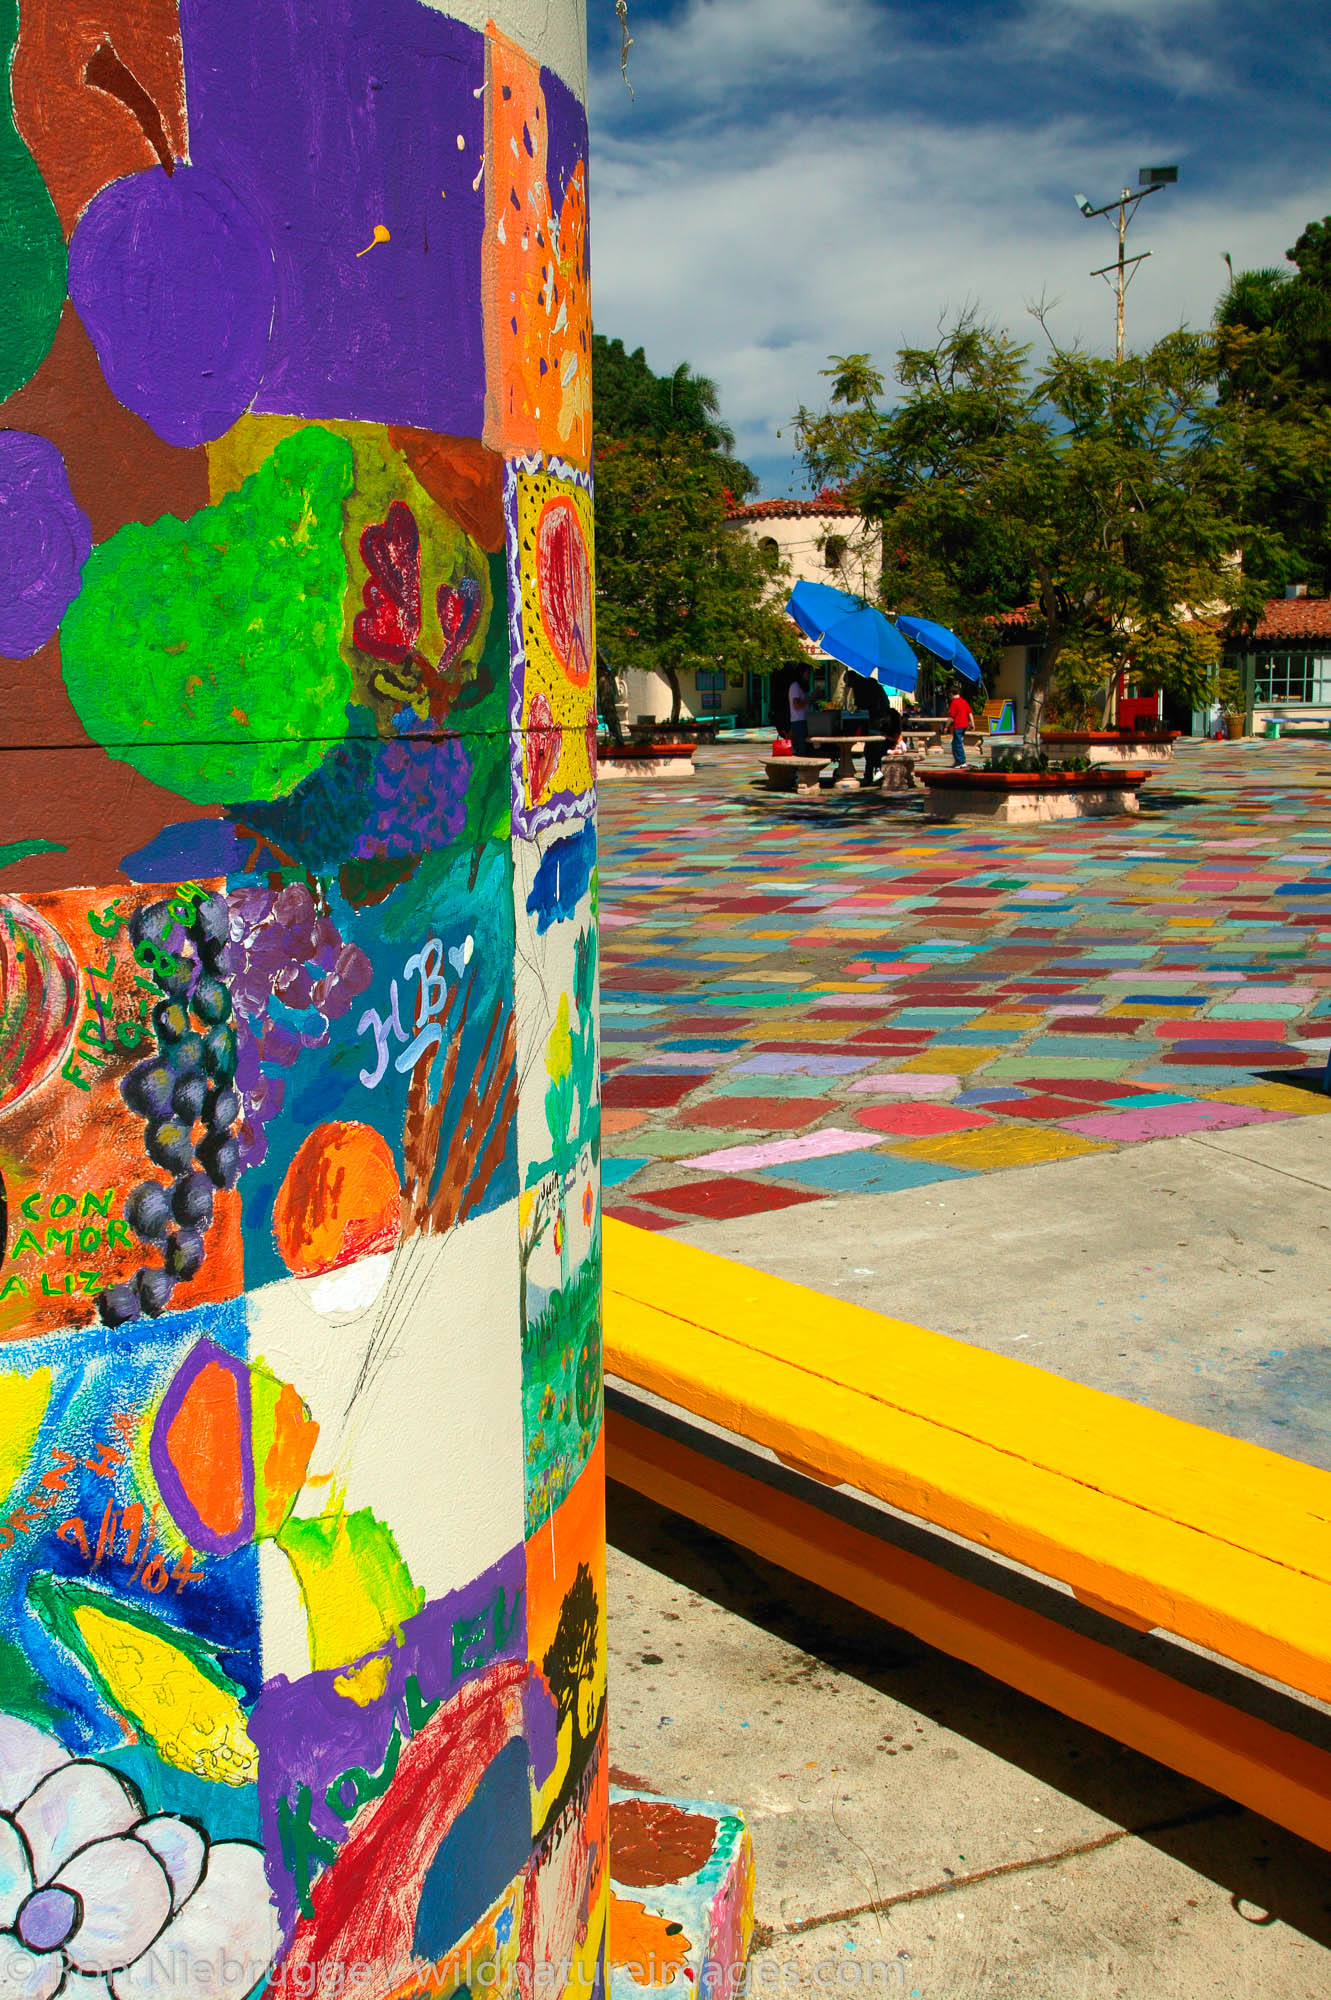 The Spanish Village Art Center, Balboa Park, San Diego, California.